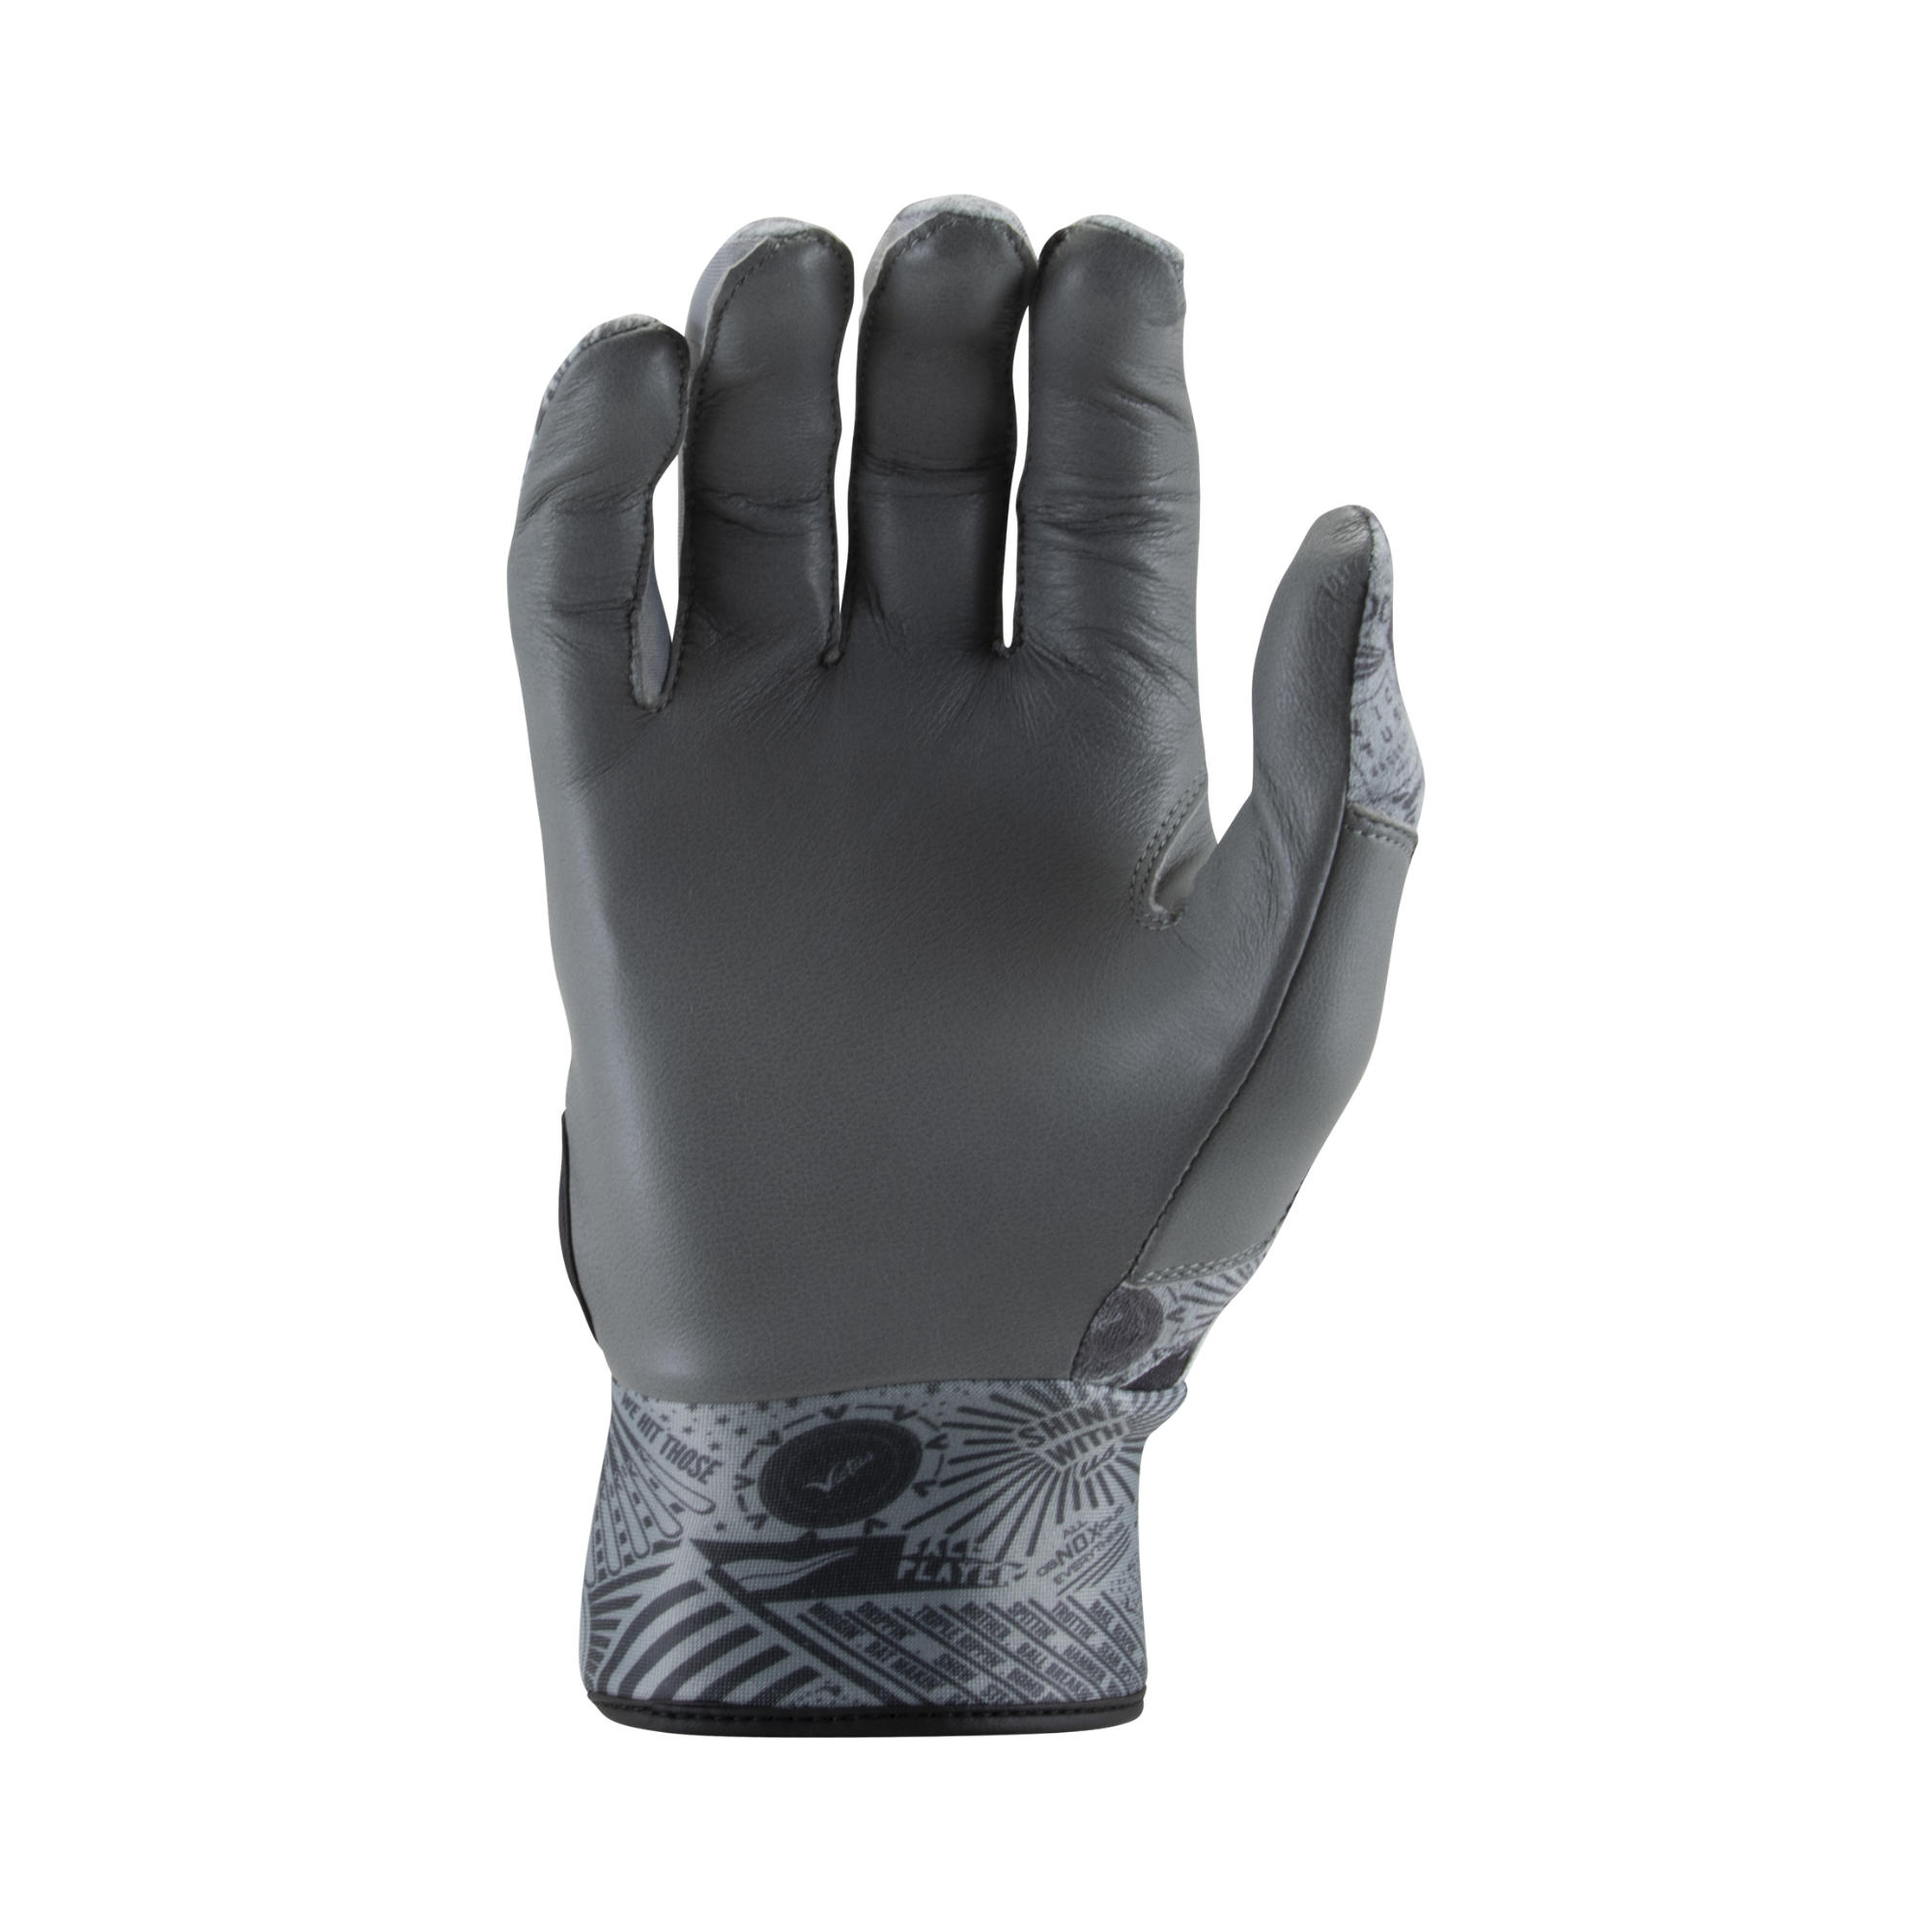 Victus Nox Batting Glove - Gray/Black